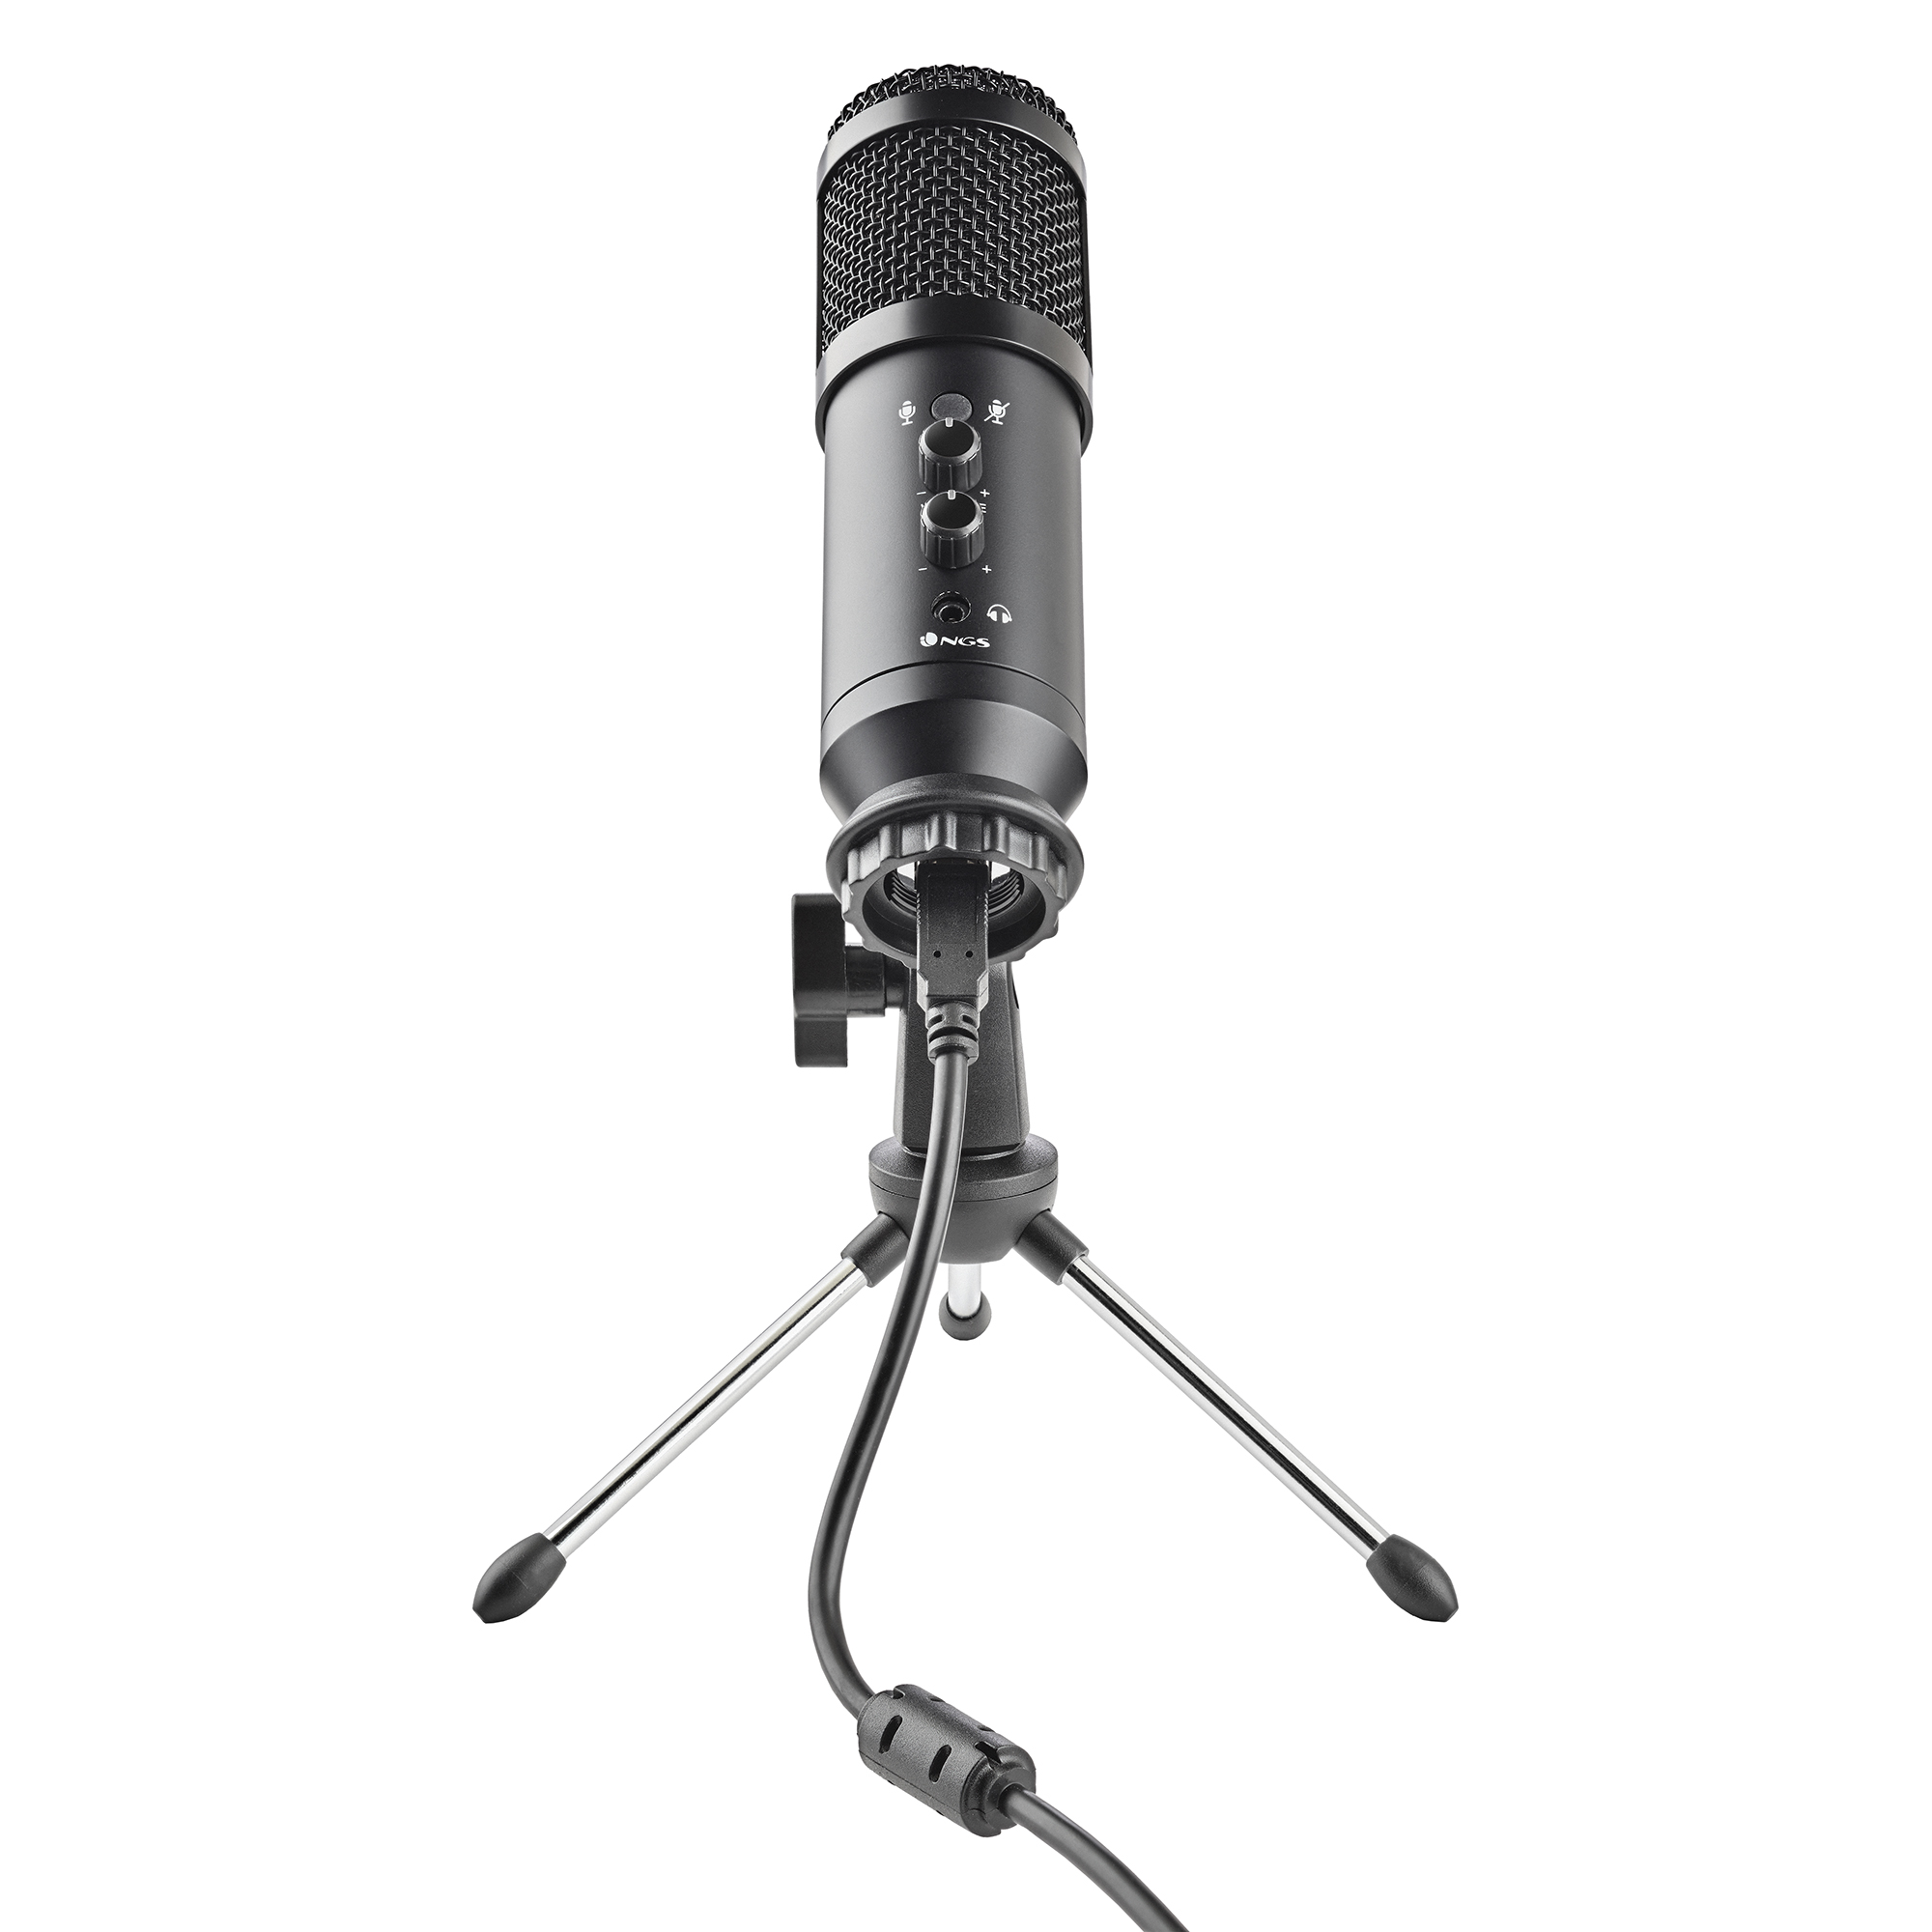 GMICX-110 NGS Schwarz Mikrofon